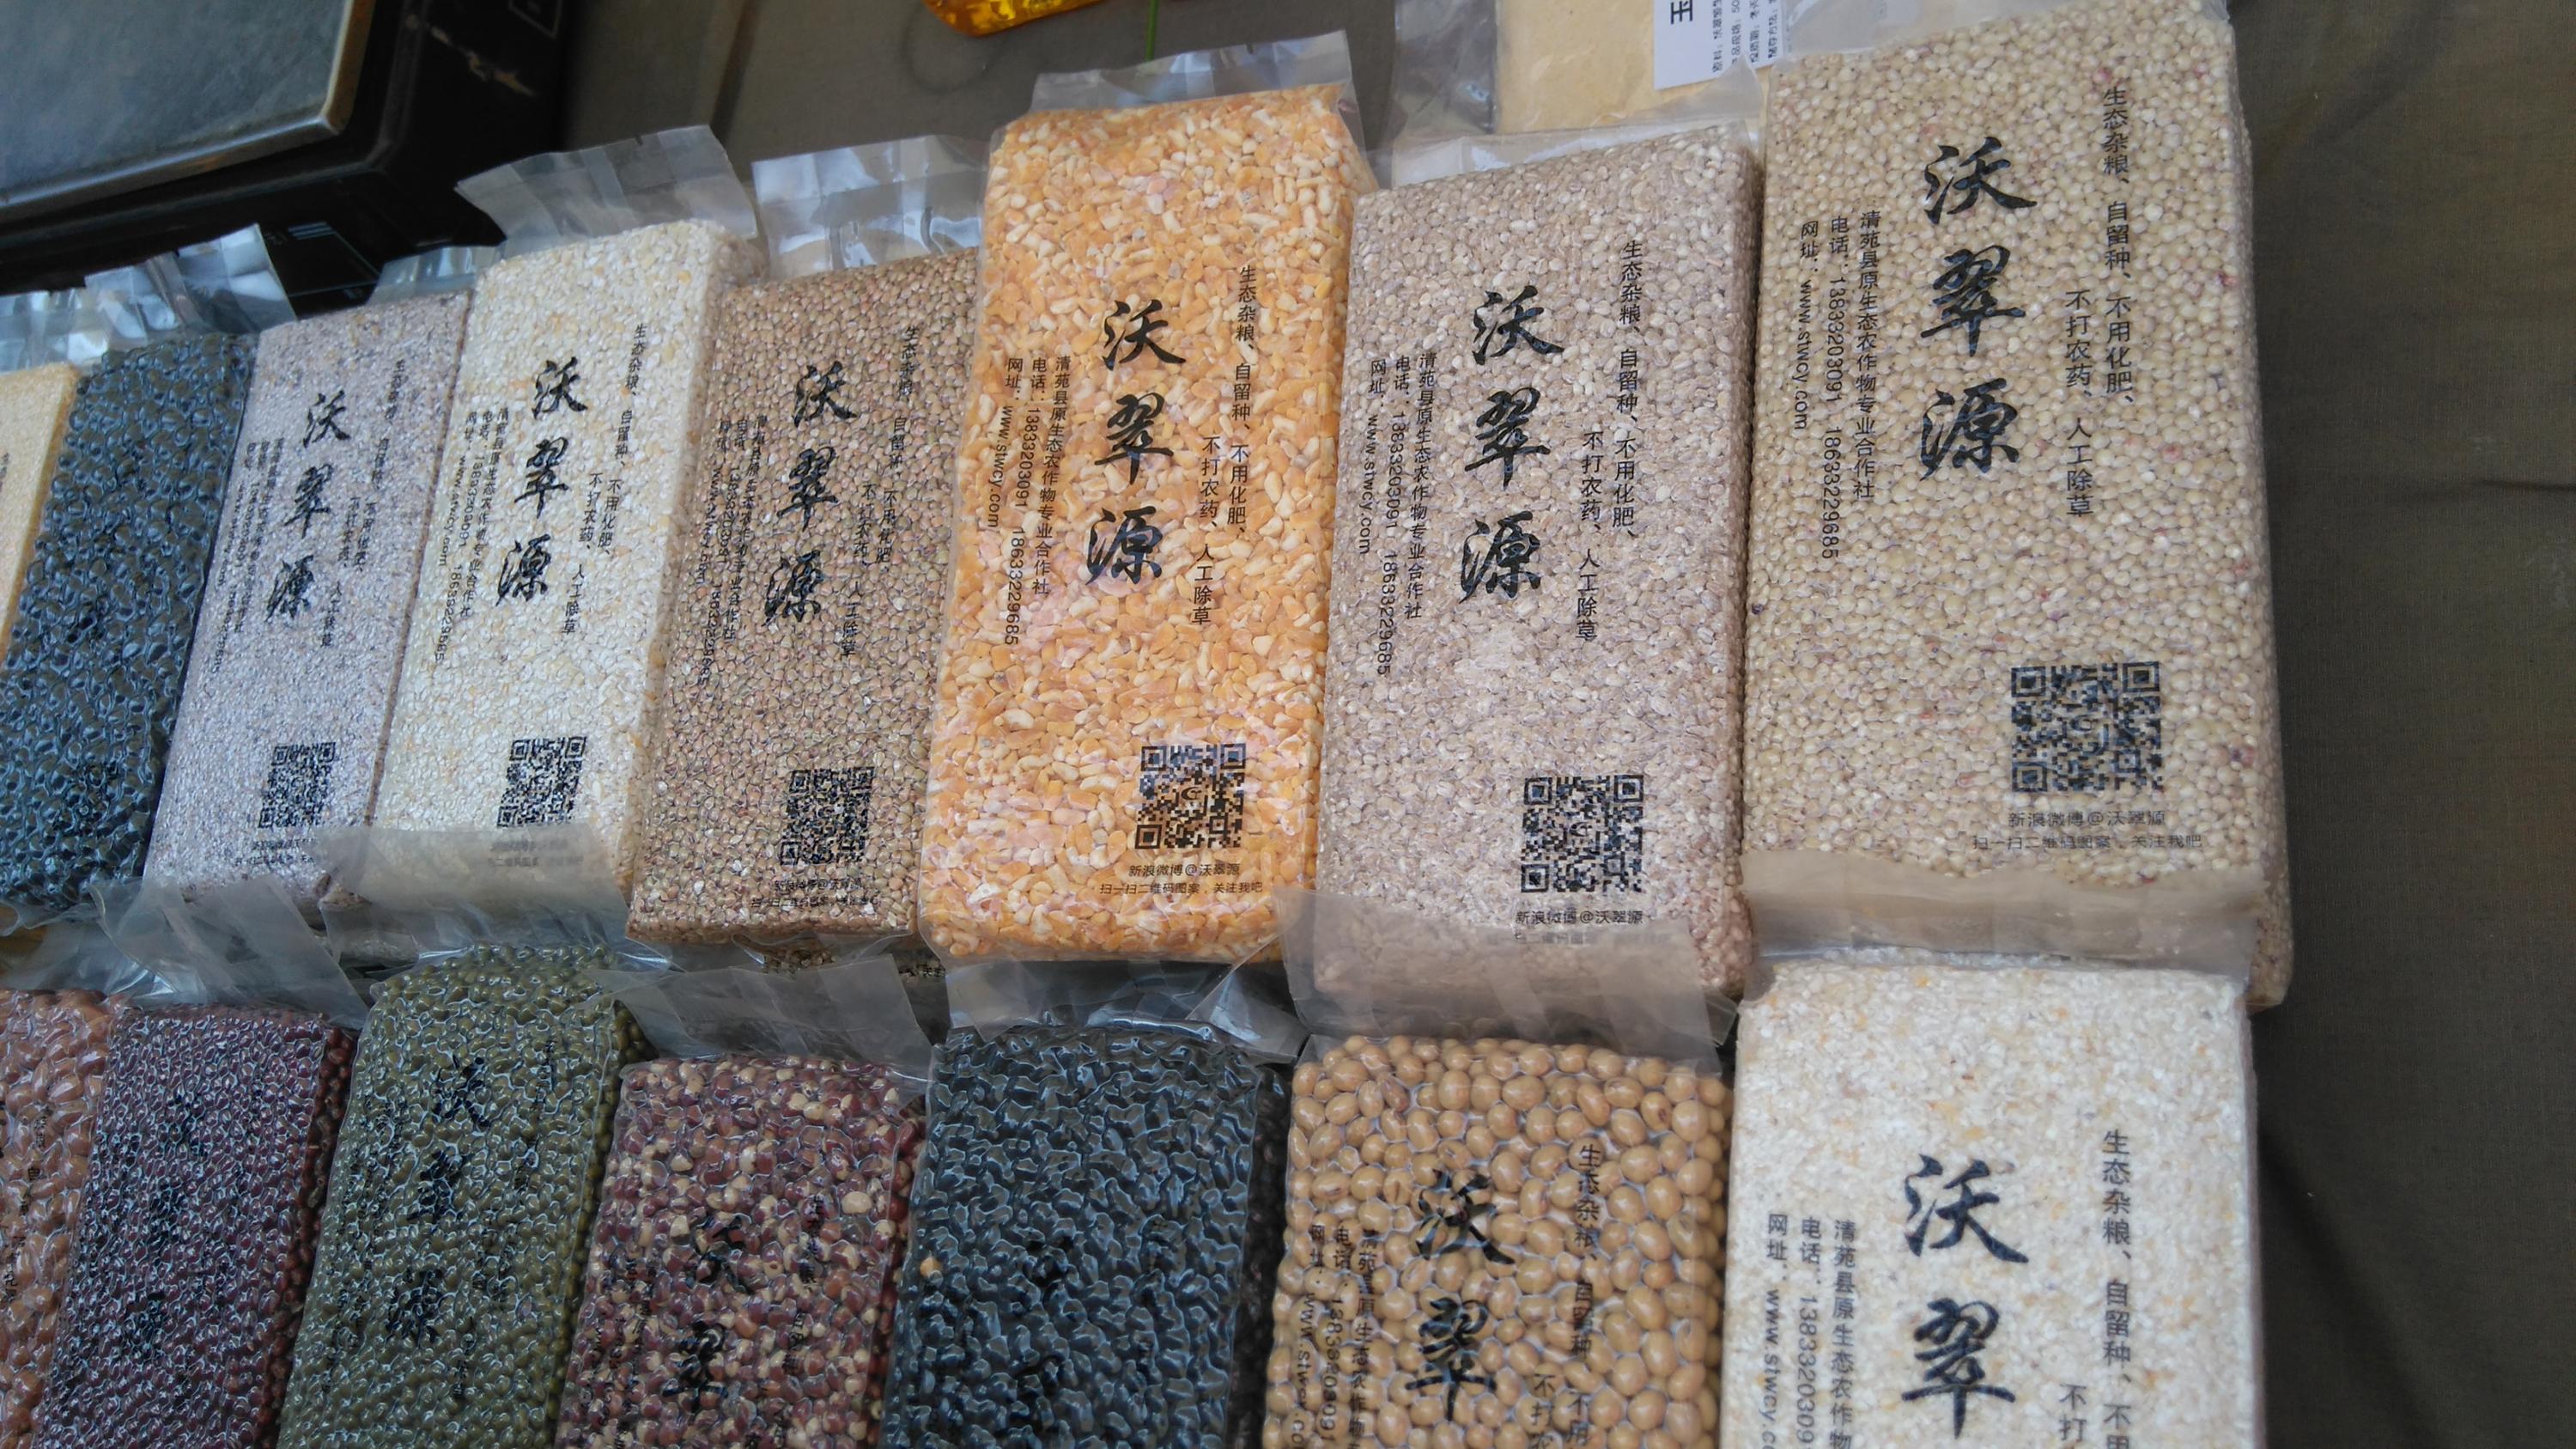 farmer's market grains